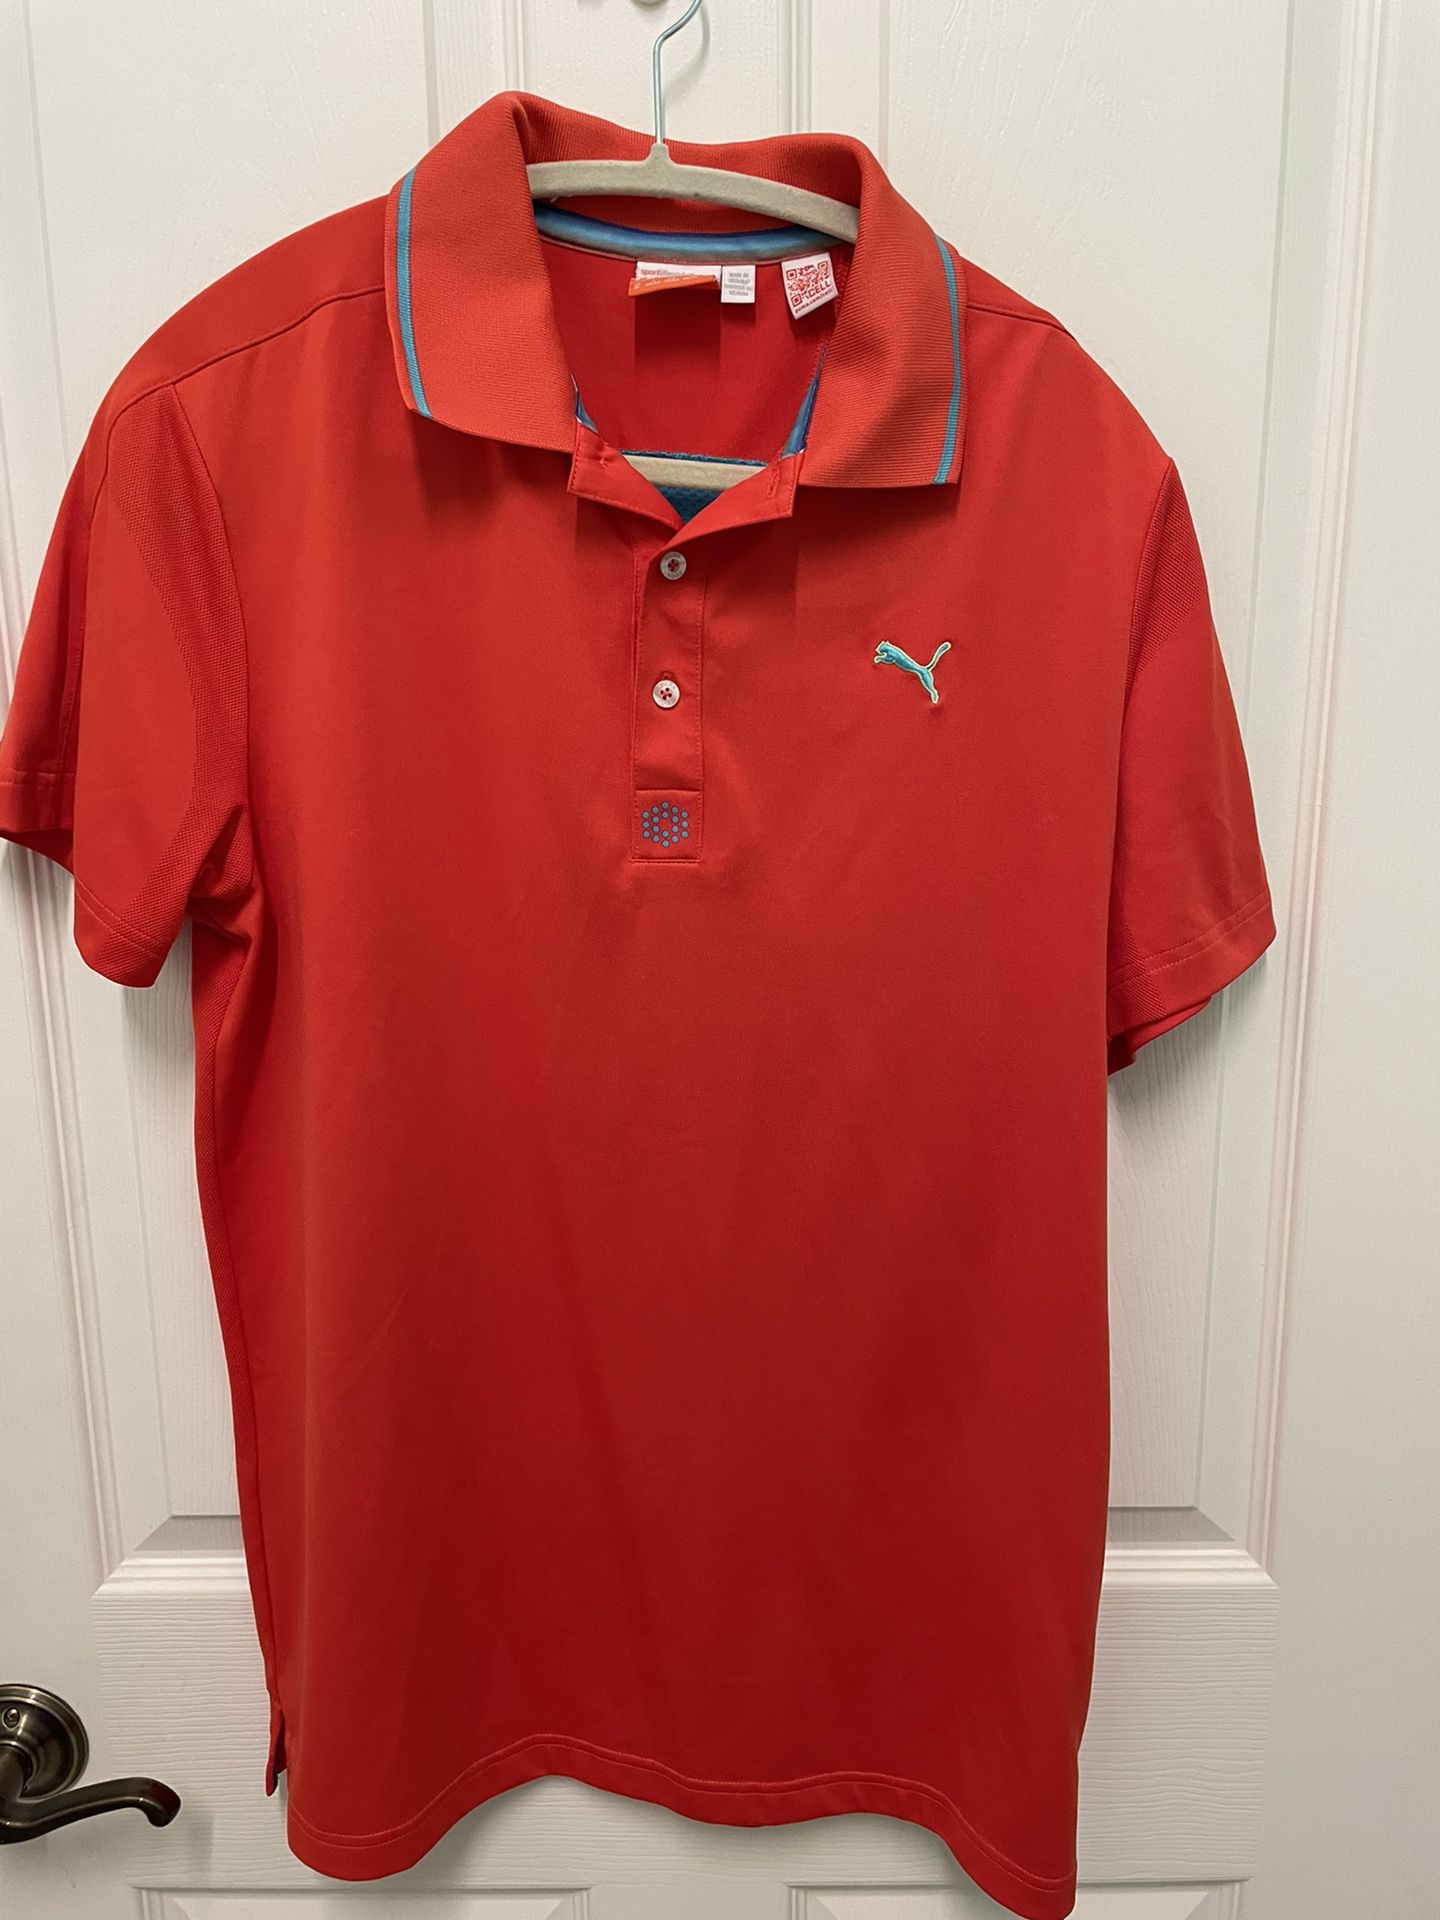 Puma Men’s medium Golf Shirt 